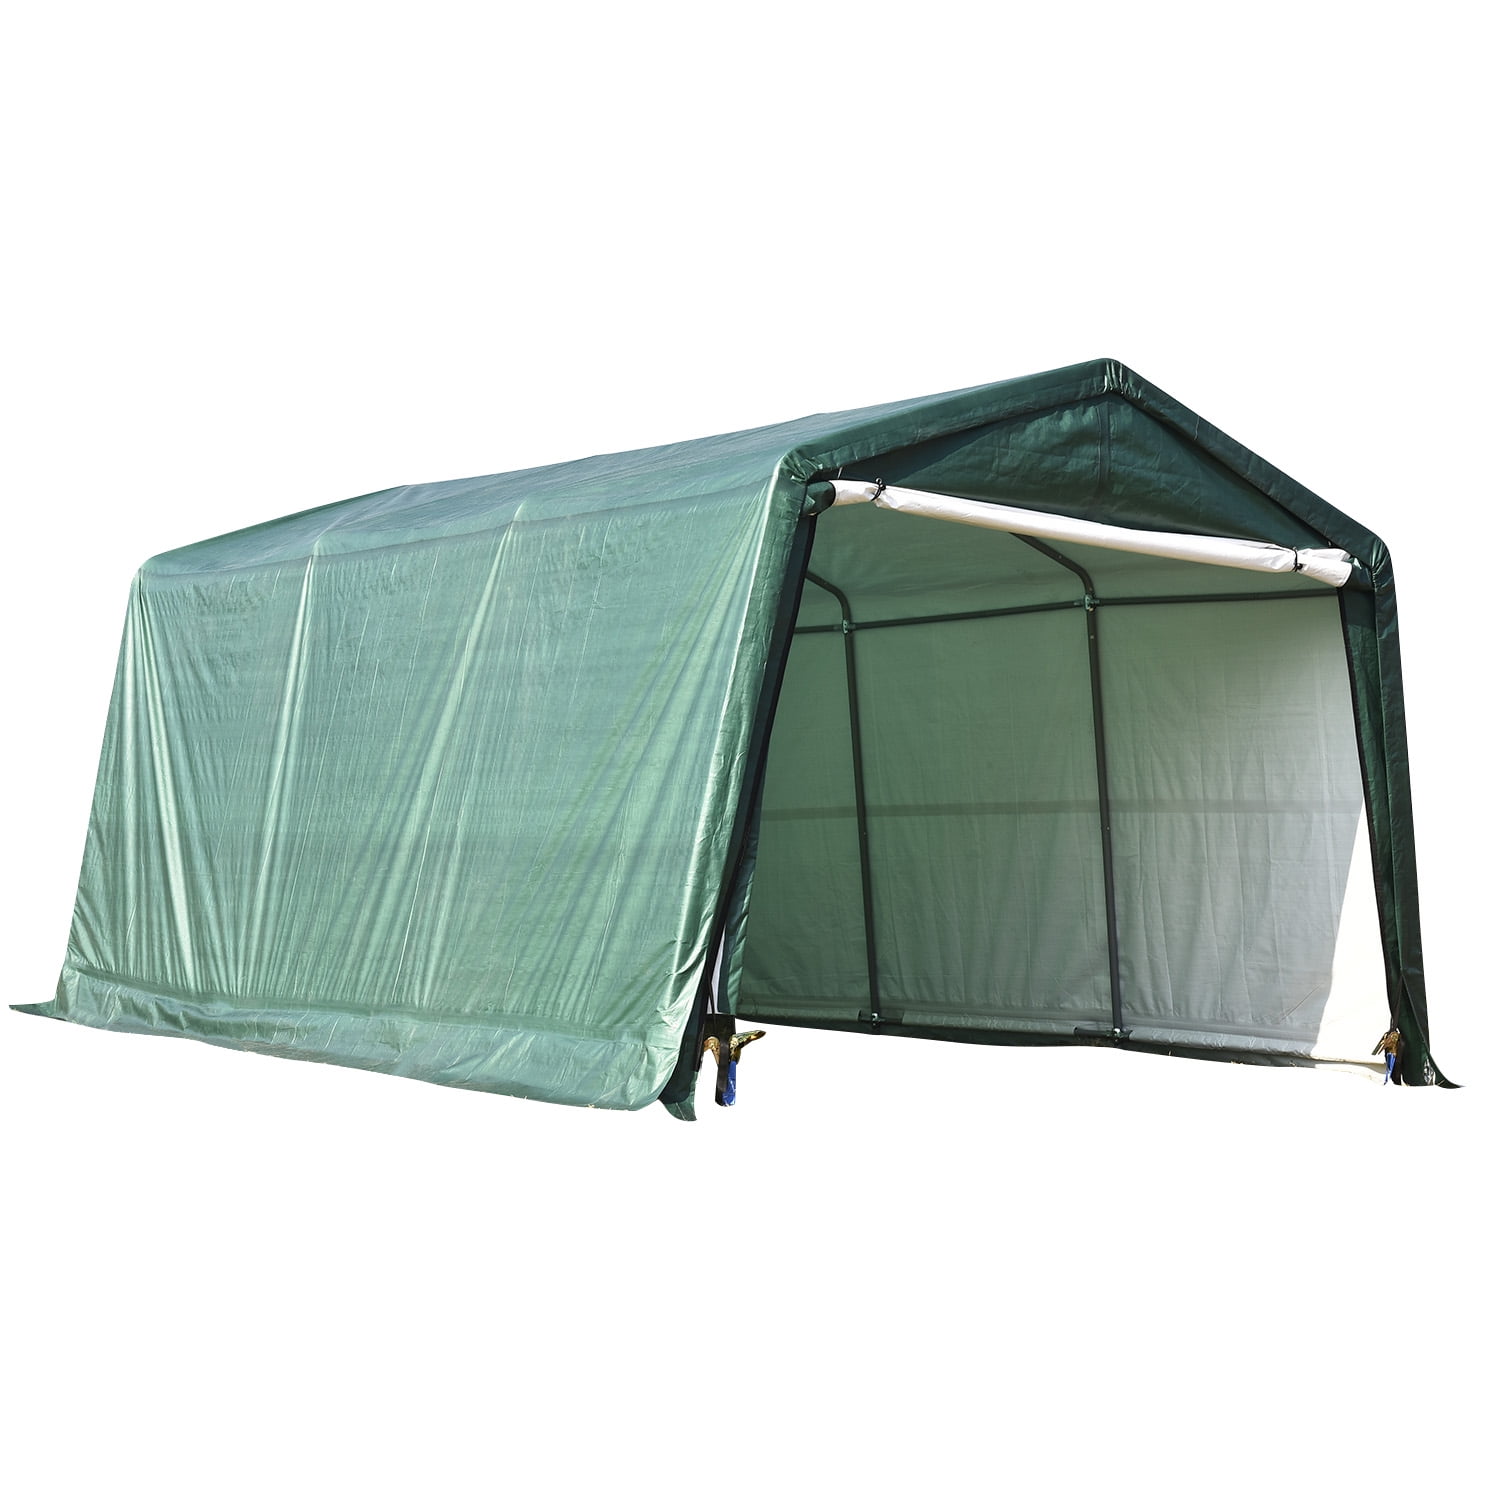 Storage Shed Logic Tent Shelter Car Garage Steel Carport 10'x10'x8'/10'x15'x8'FT 